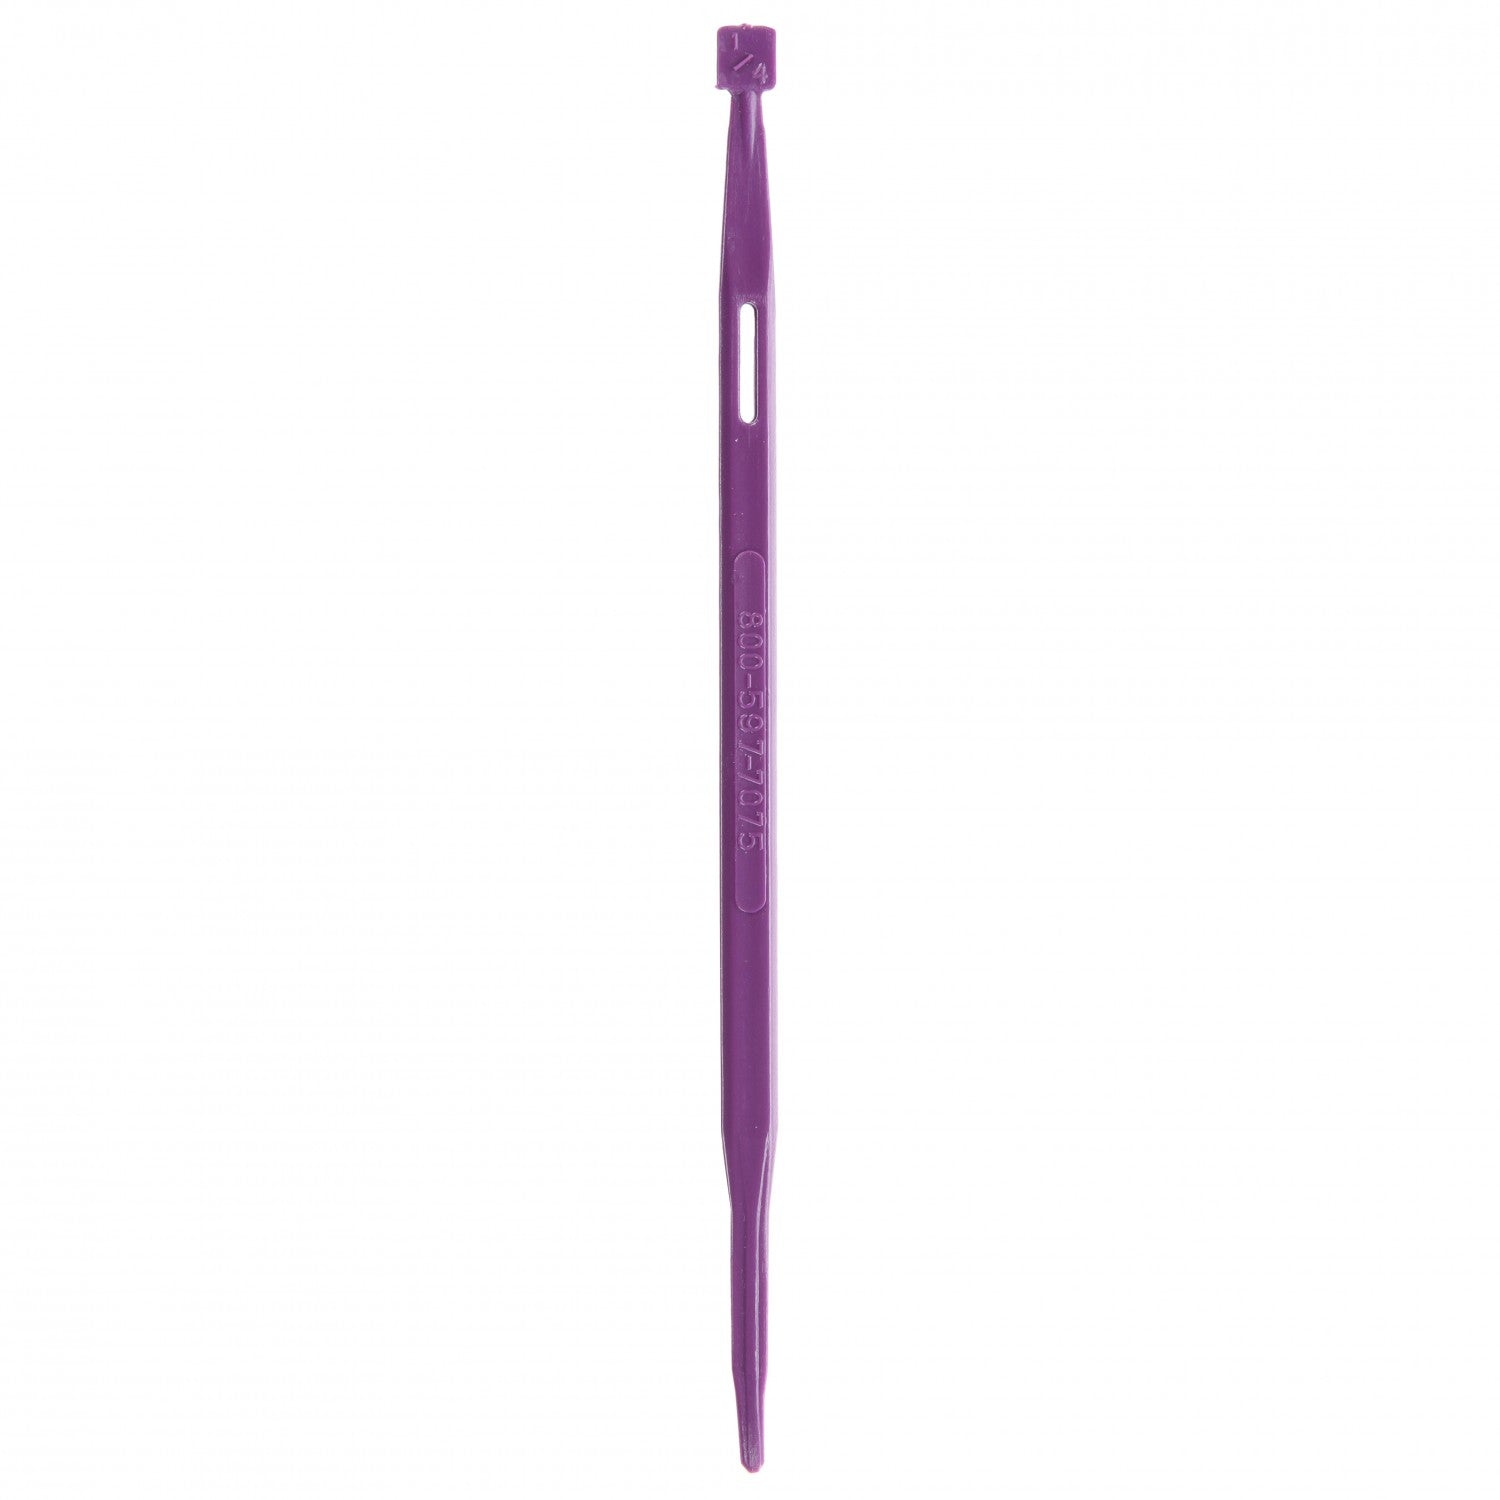 That Purple Thang Tool